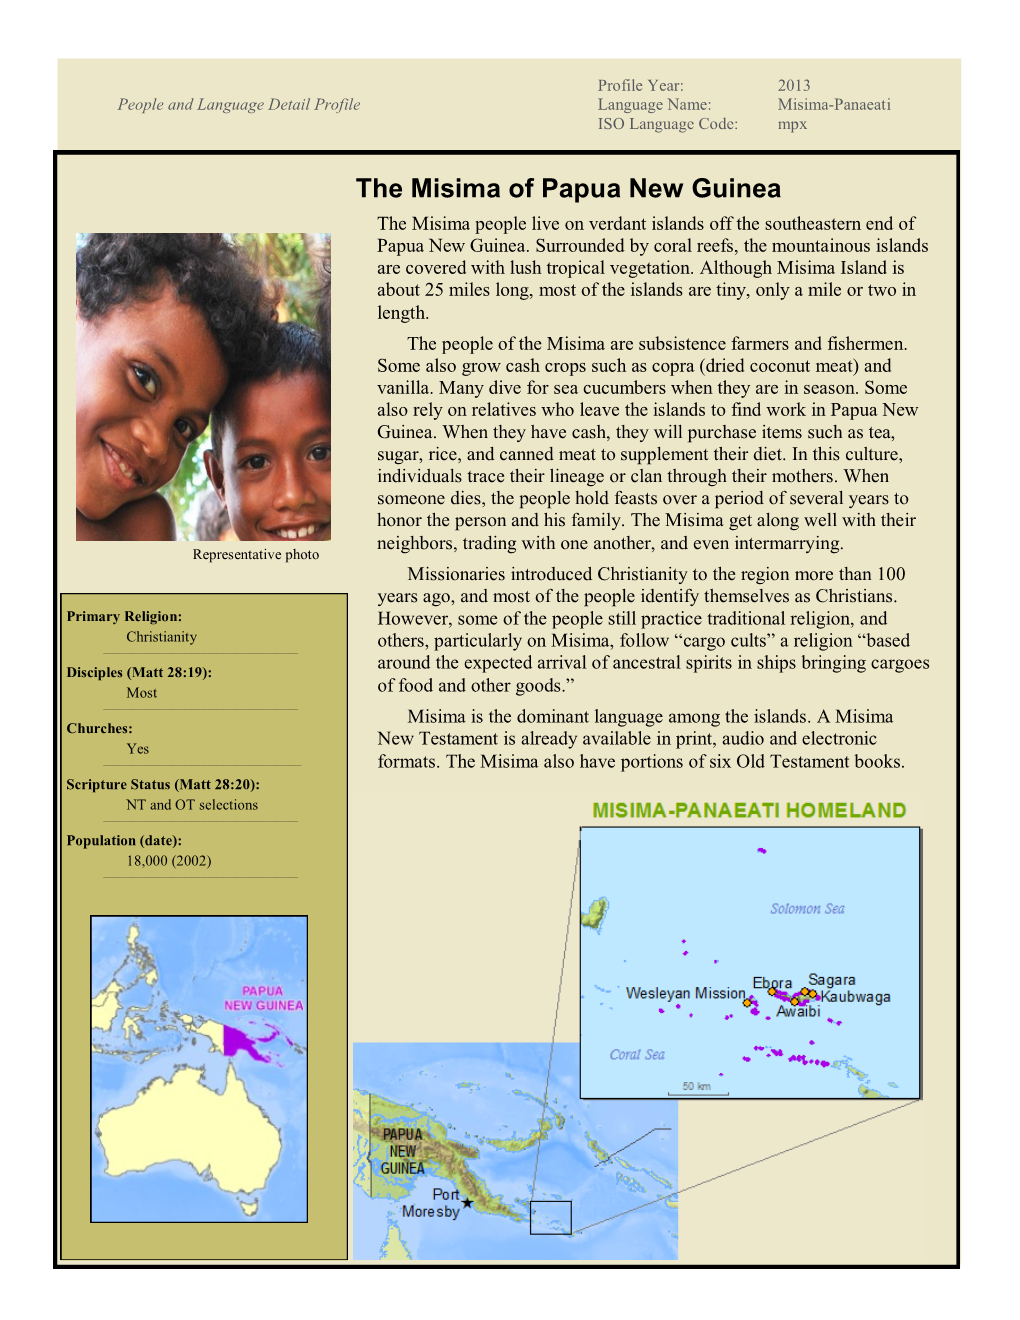 The Misima of Papua New Guinea the Misima People Live on Verdant Islands Off the Southeastern End of Papua New Guinea